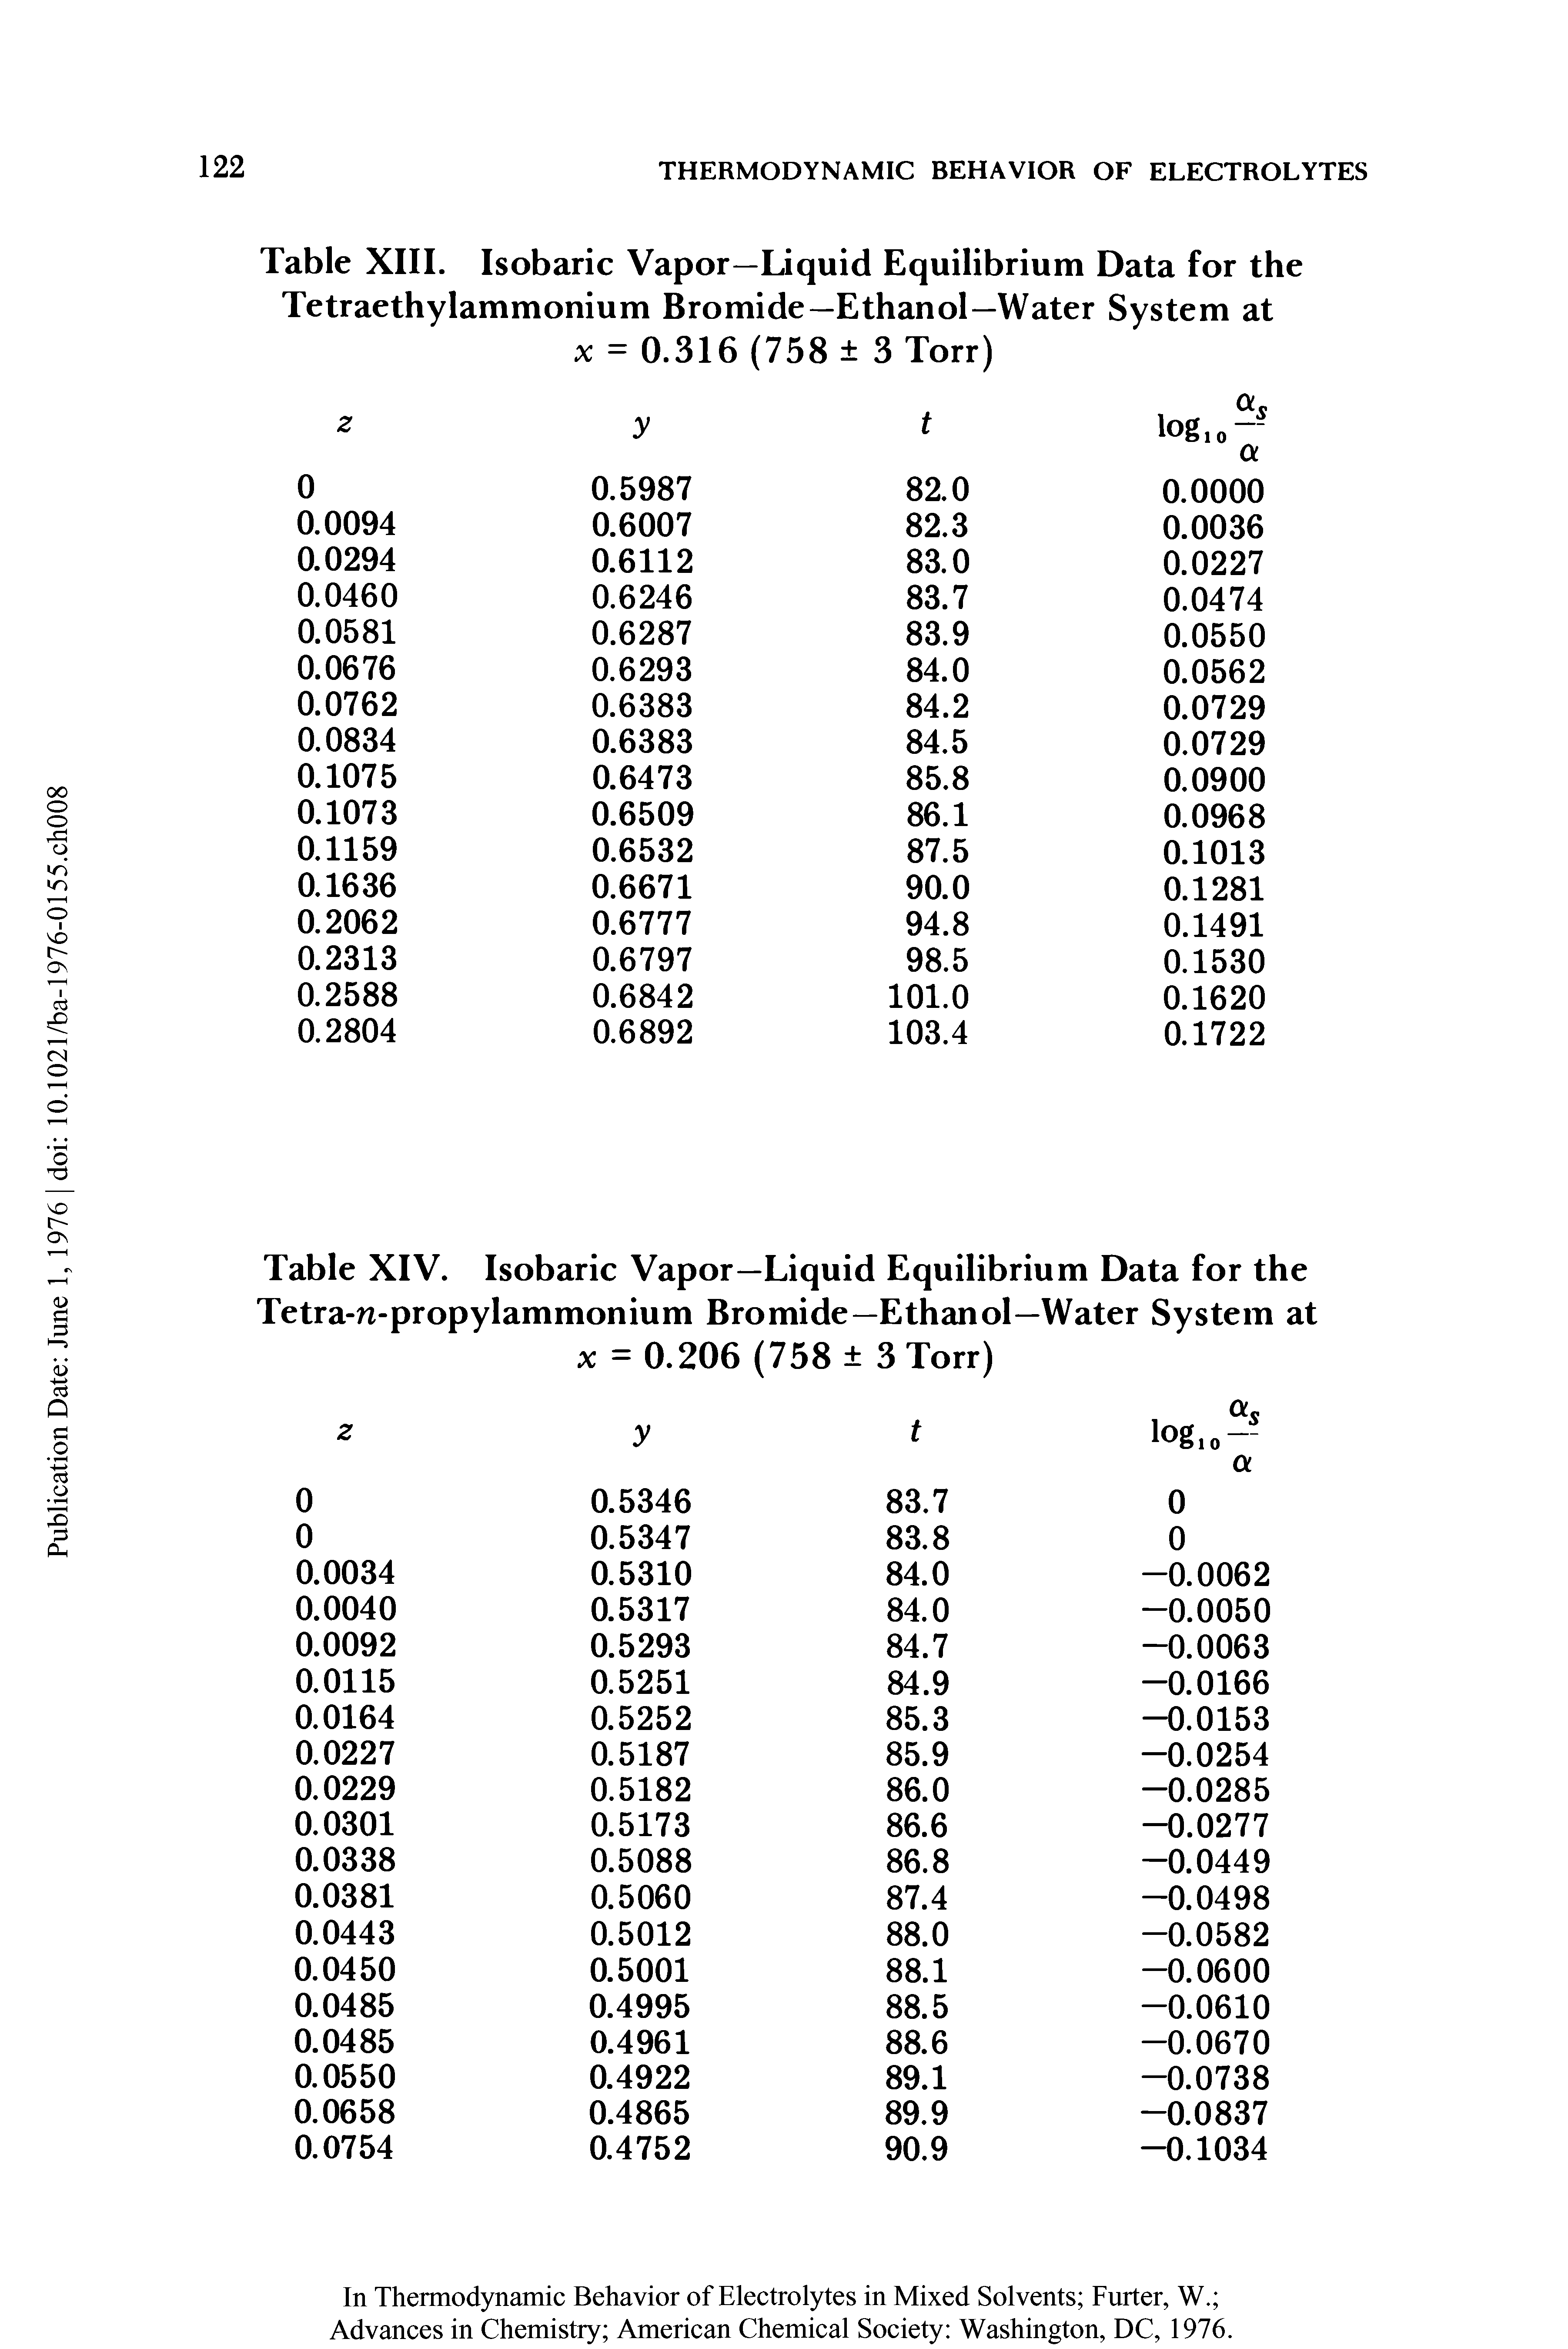 Table XIV. Isobaric Vapor—Liquid Equilibrium Data for the Tetra-n-propylammonium Bromide—Ethanol—Water System at x = 0.206 (758 3 Torr)...